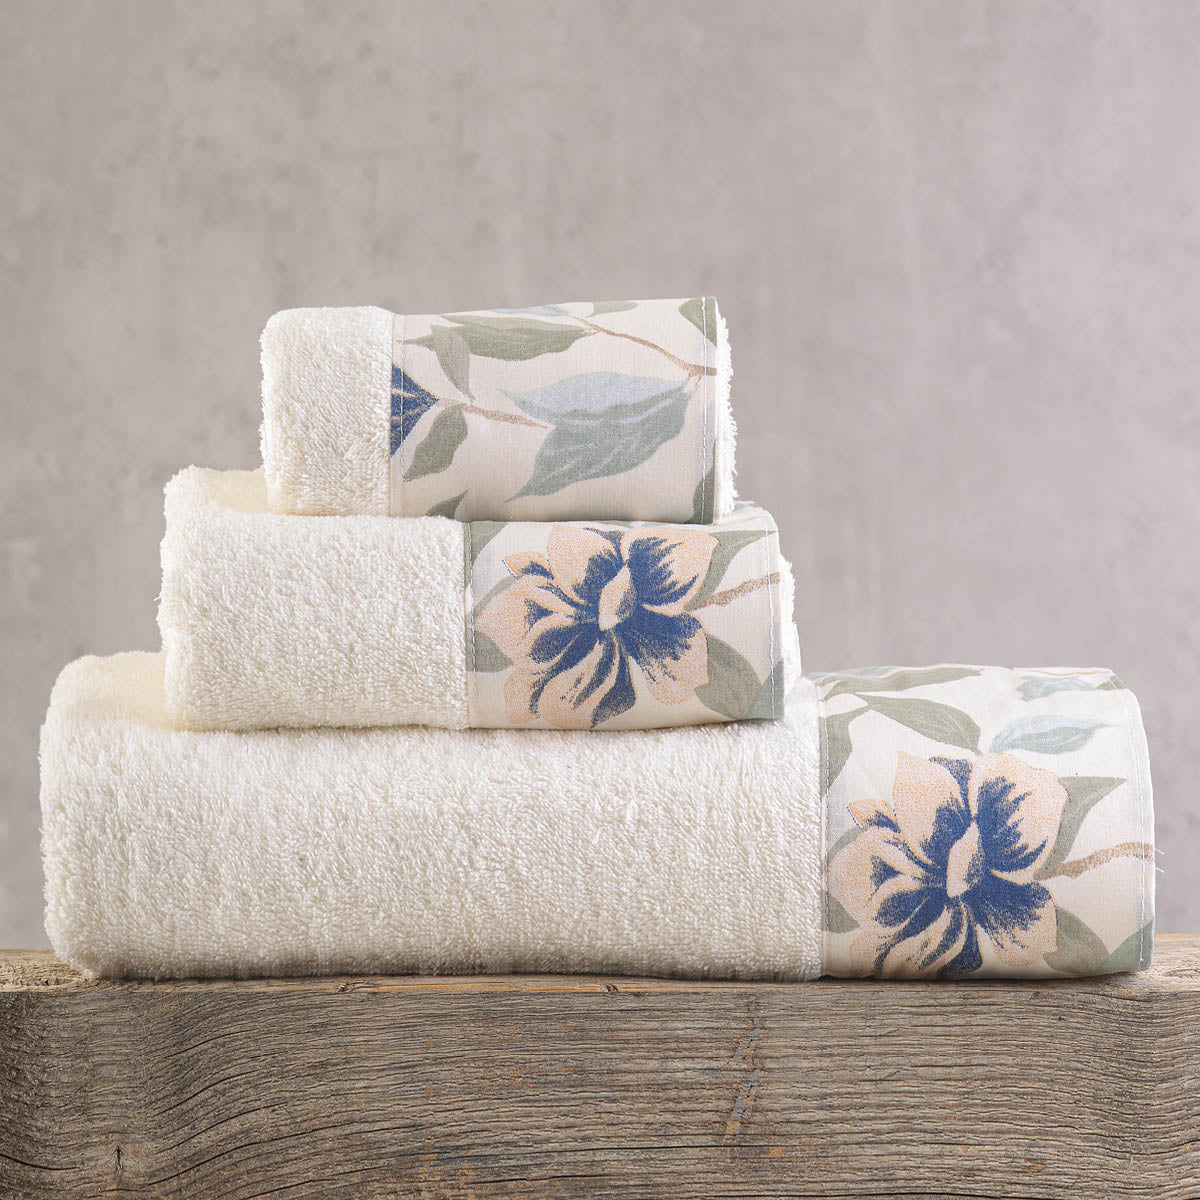 ILINA Μπλε - Σετ πετσέτες 3 τεμ. Μπλε 30 x 50, 50 x 90, 80 x 150 από την εταιρεία Rythmos Home